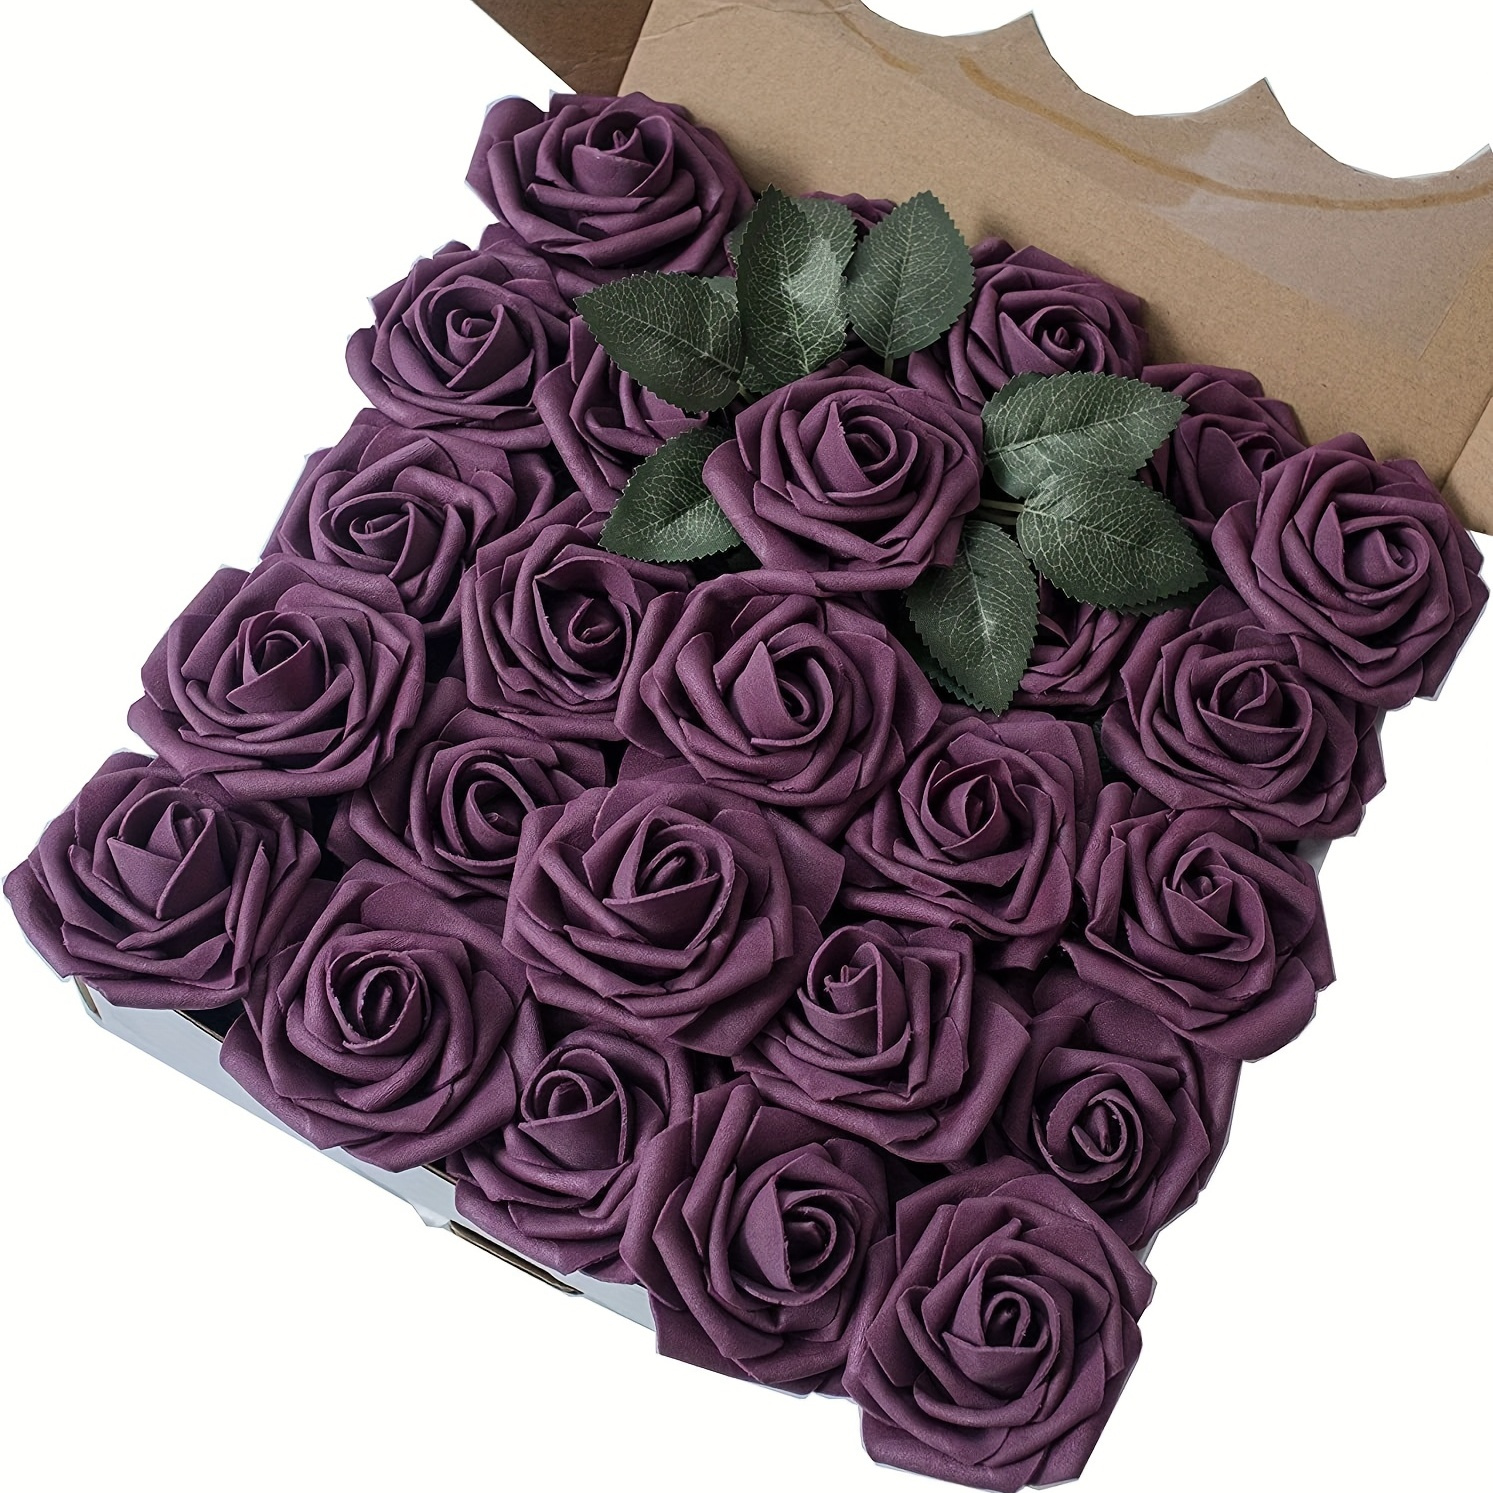 

25pcs Ombre Plum Roses - Artificial Flowers For Outdoor Weddings, Home Decor, Festivals & More!